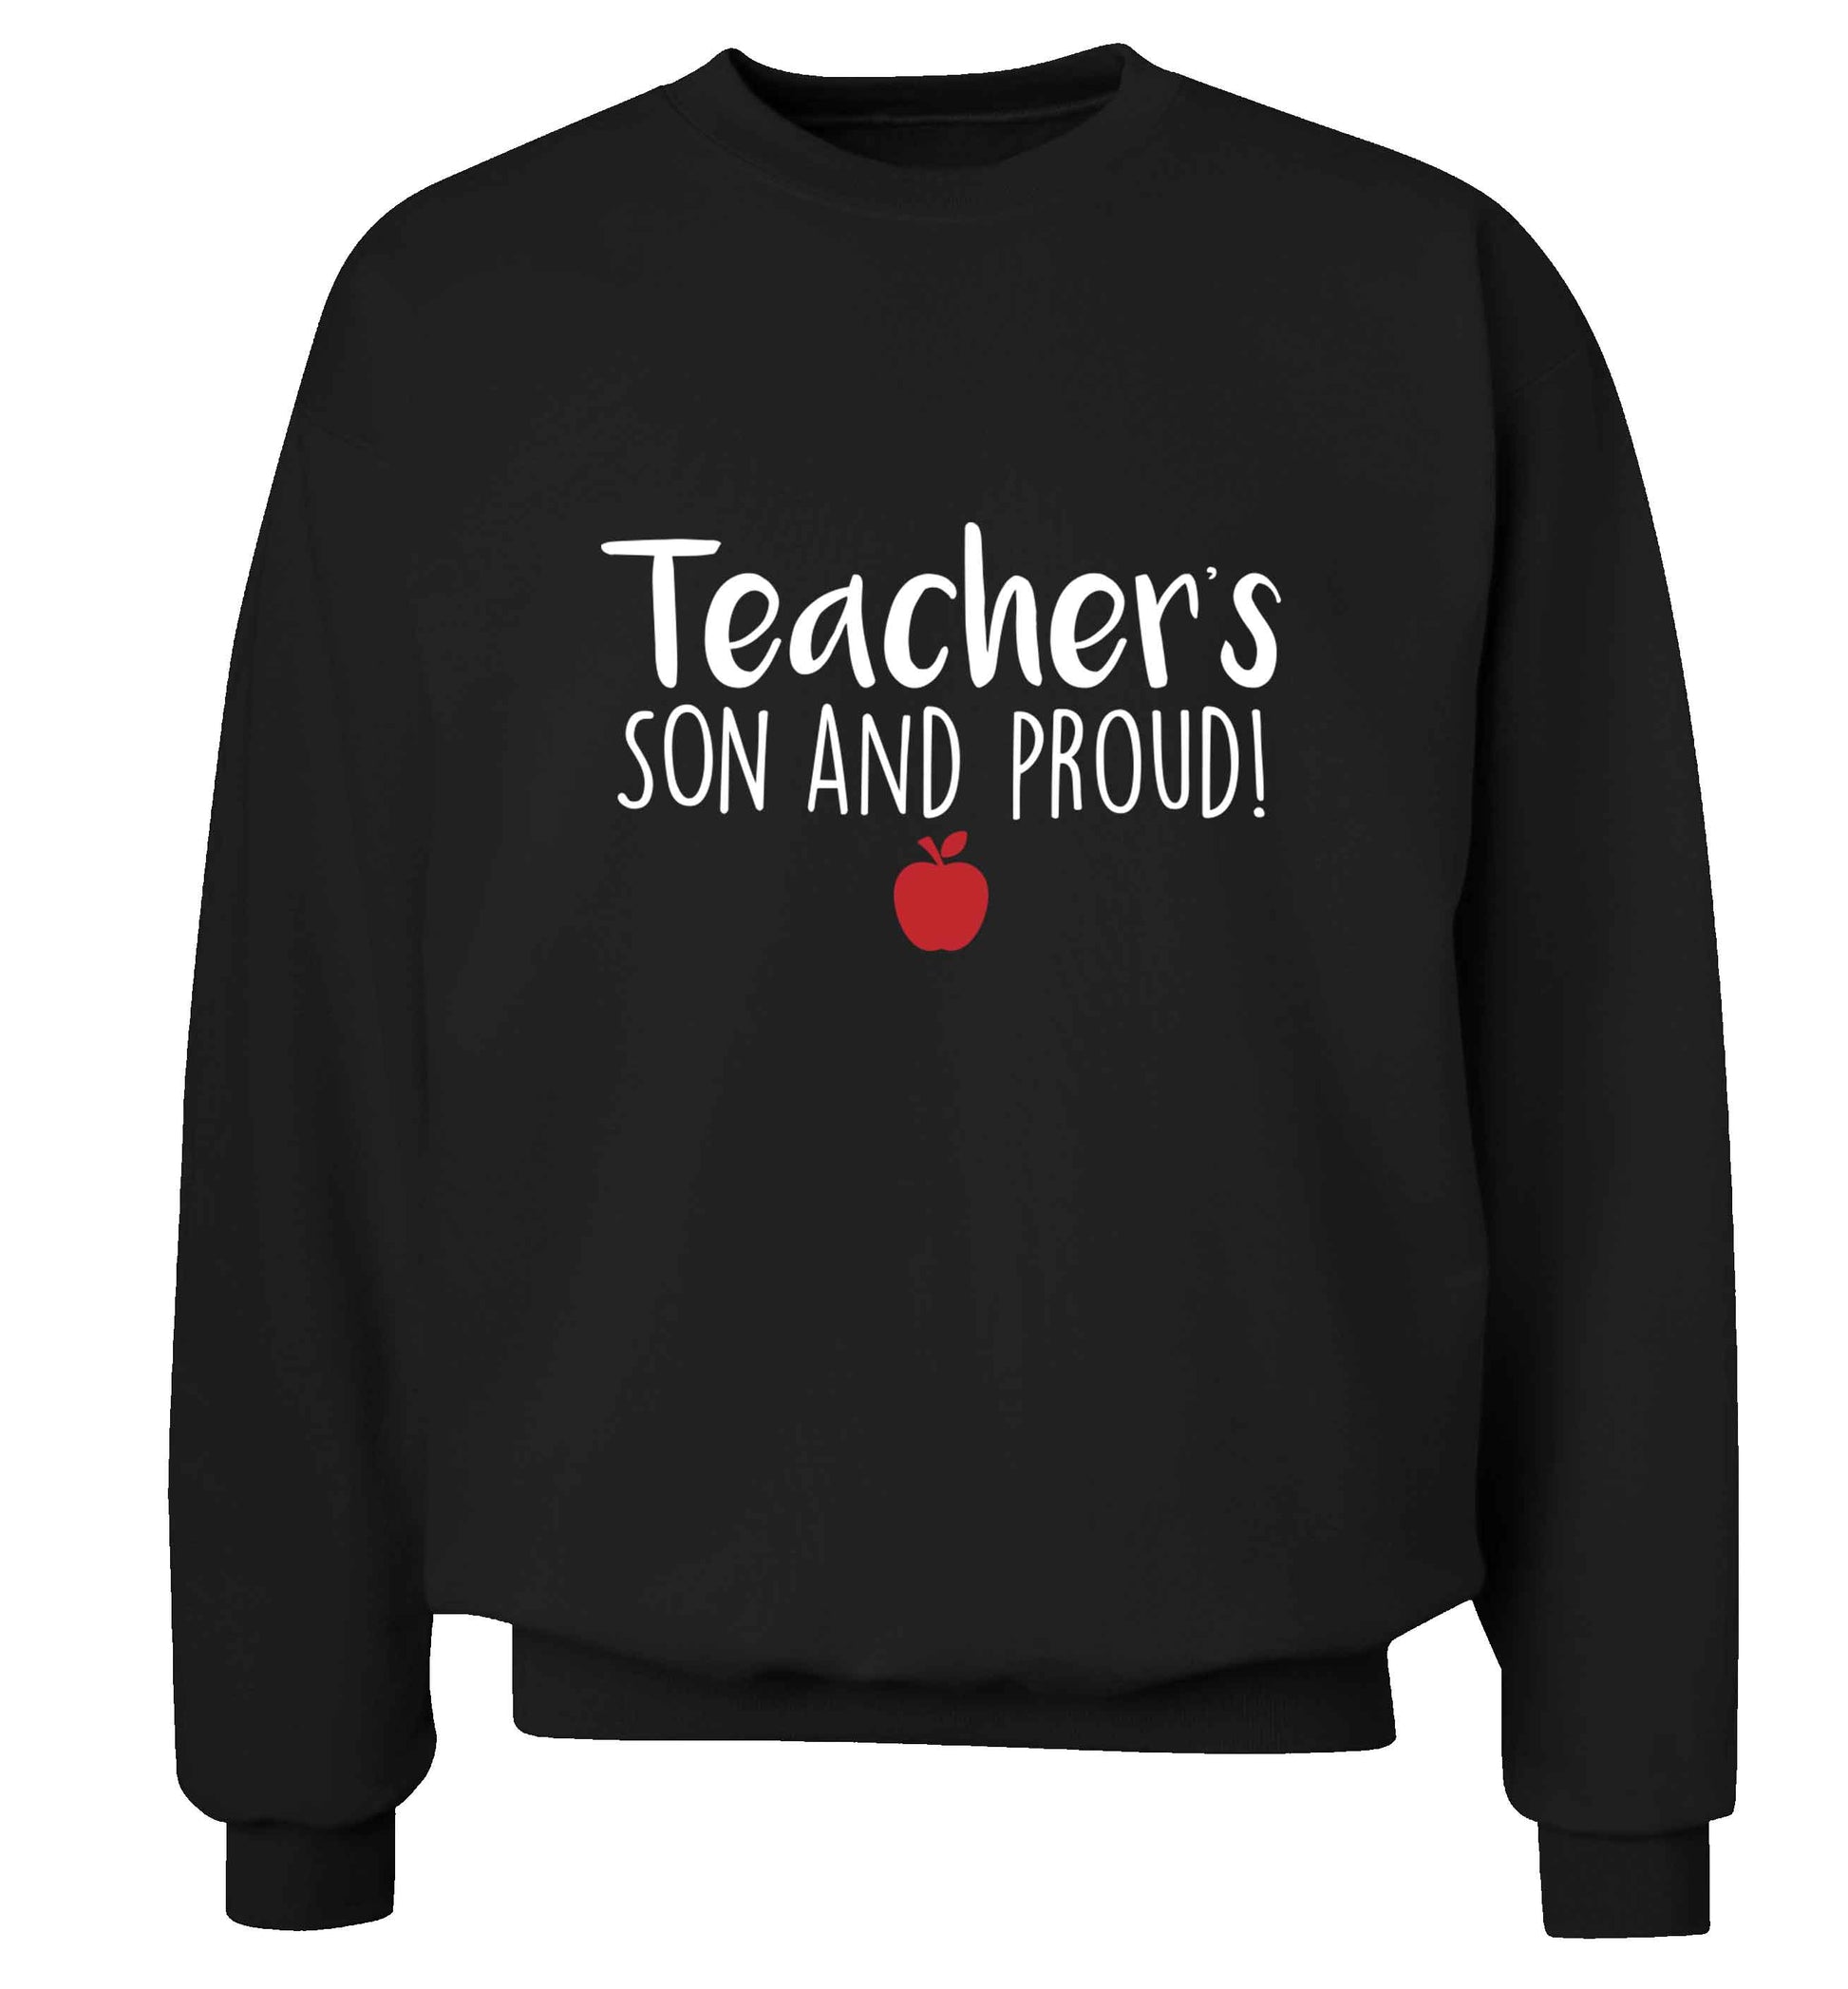 Teachers son and proud adult's unisex black sweater 2XL